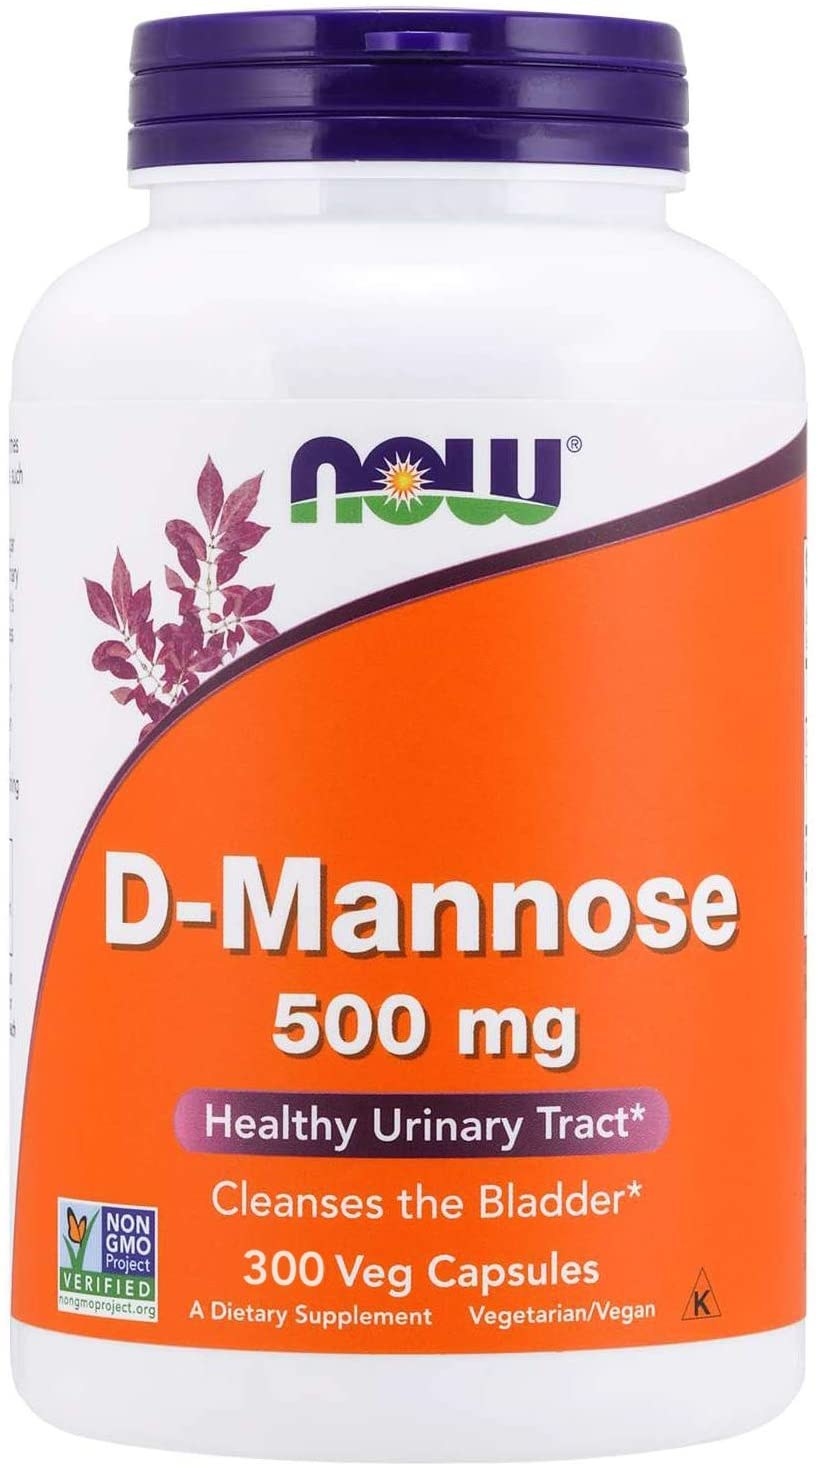 A bottle of D-Mannose